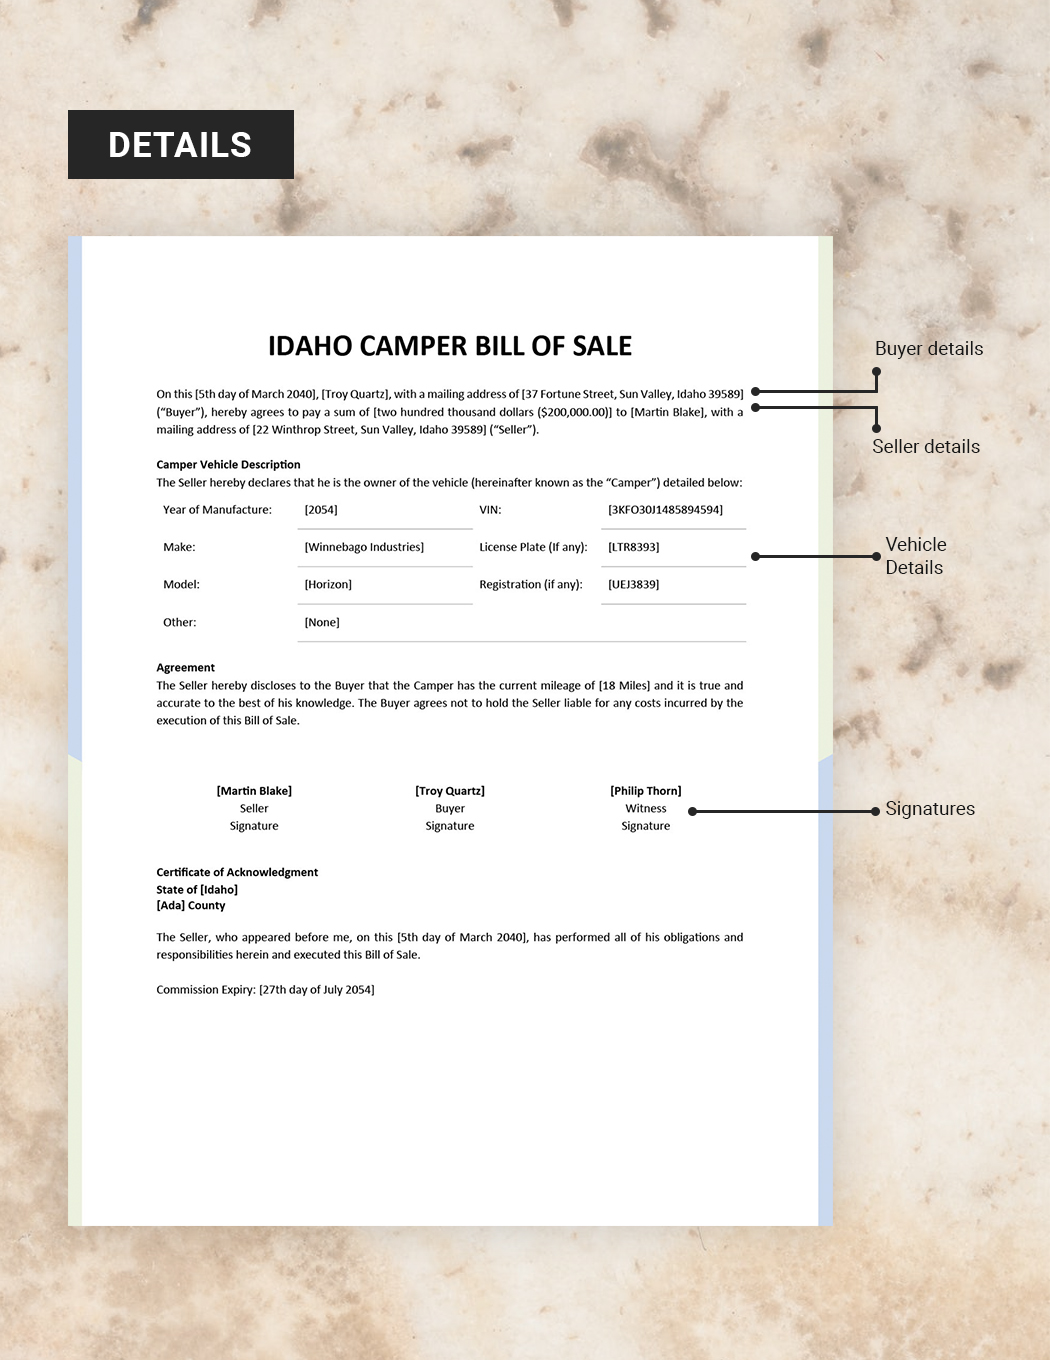 Idaho Camper Bill of Sale Template